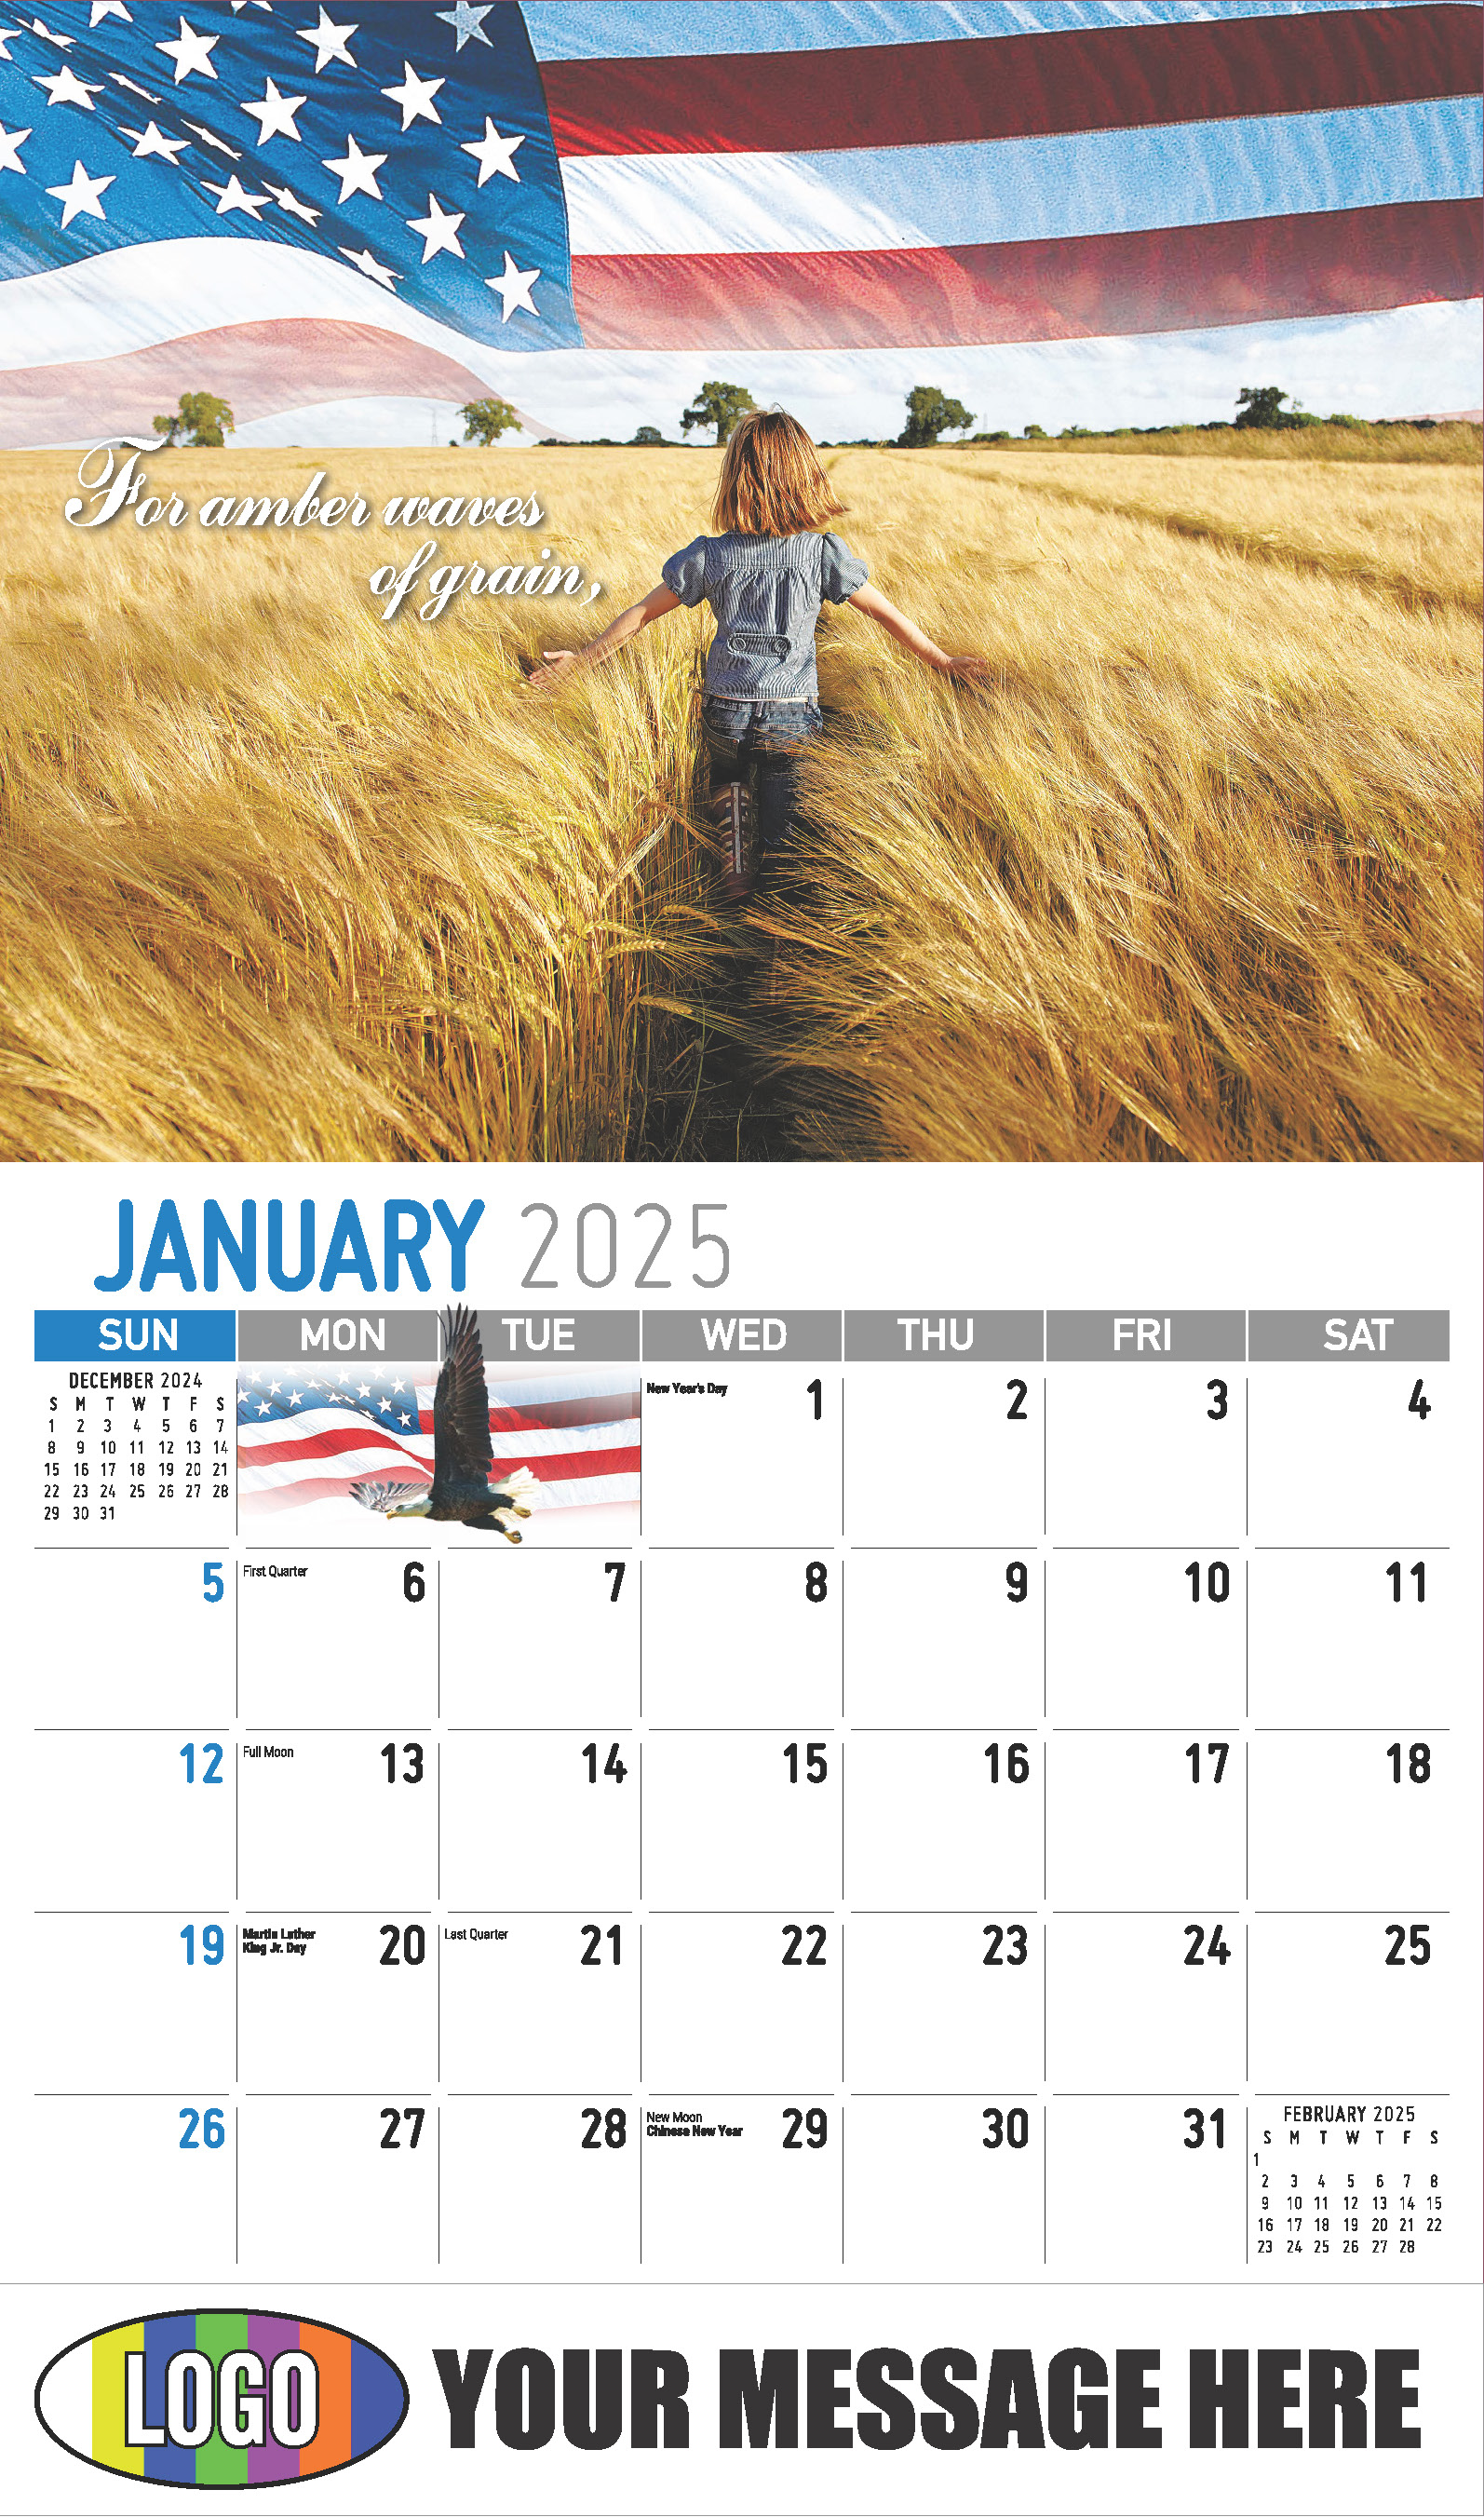 America the Beautiful  2025 Business Advertising Wall Calendar - January